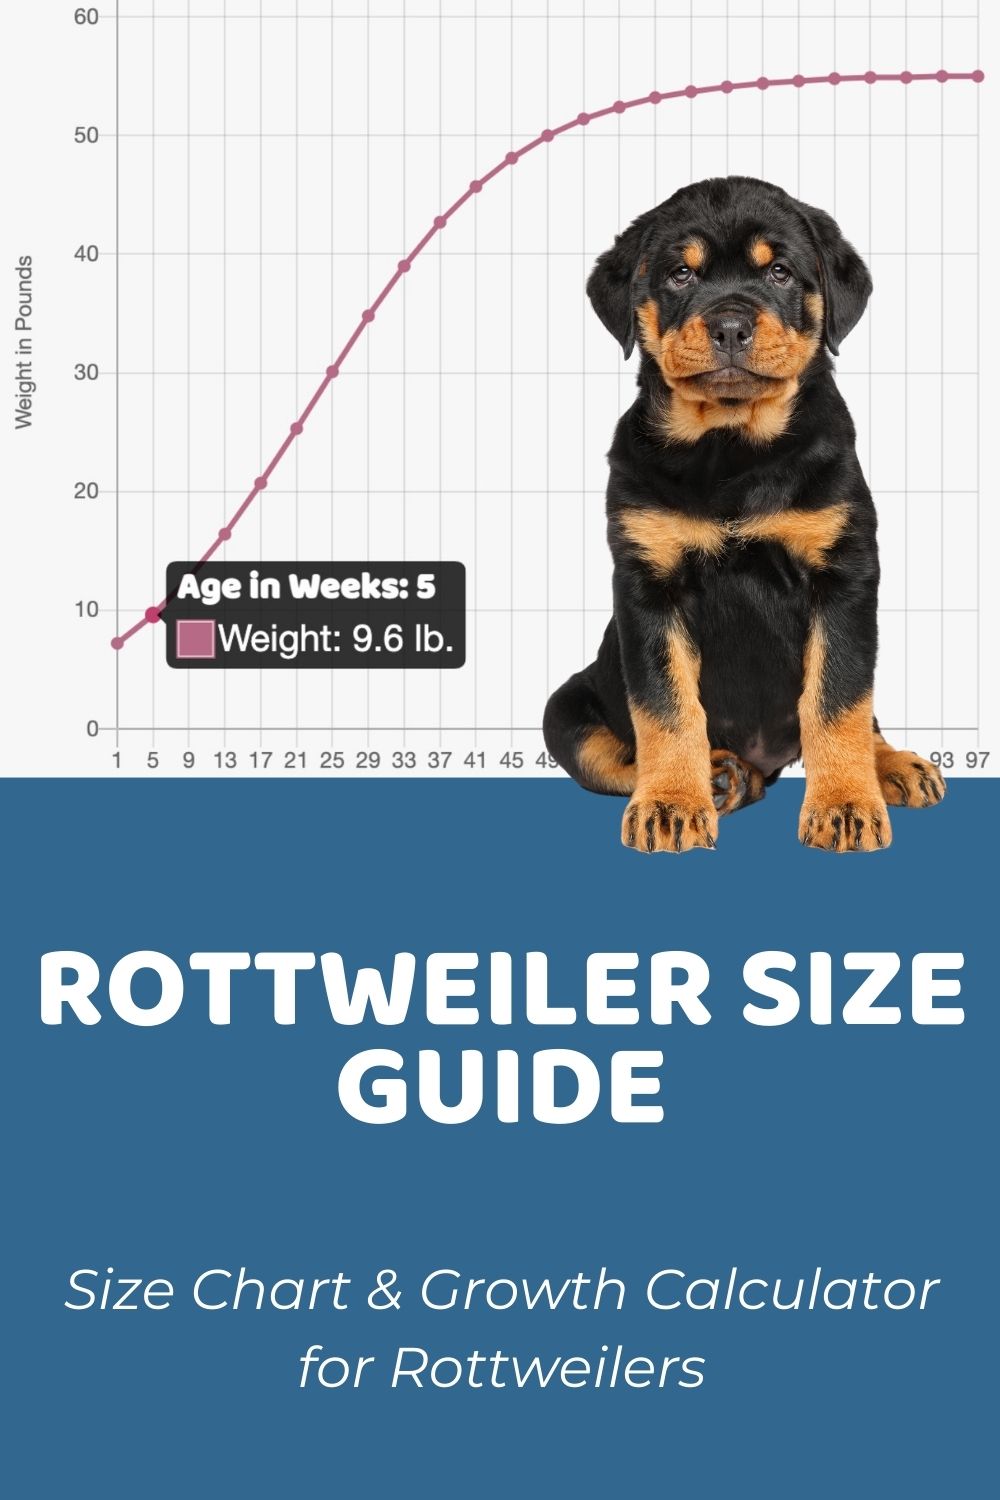 Rottweiler Size Guide: How Big Do Rottweilers Get? – Puppy Weight Calculator